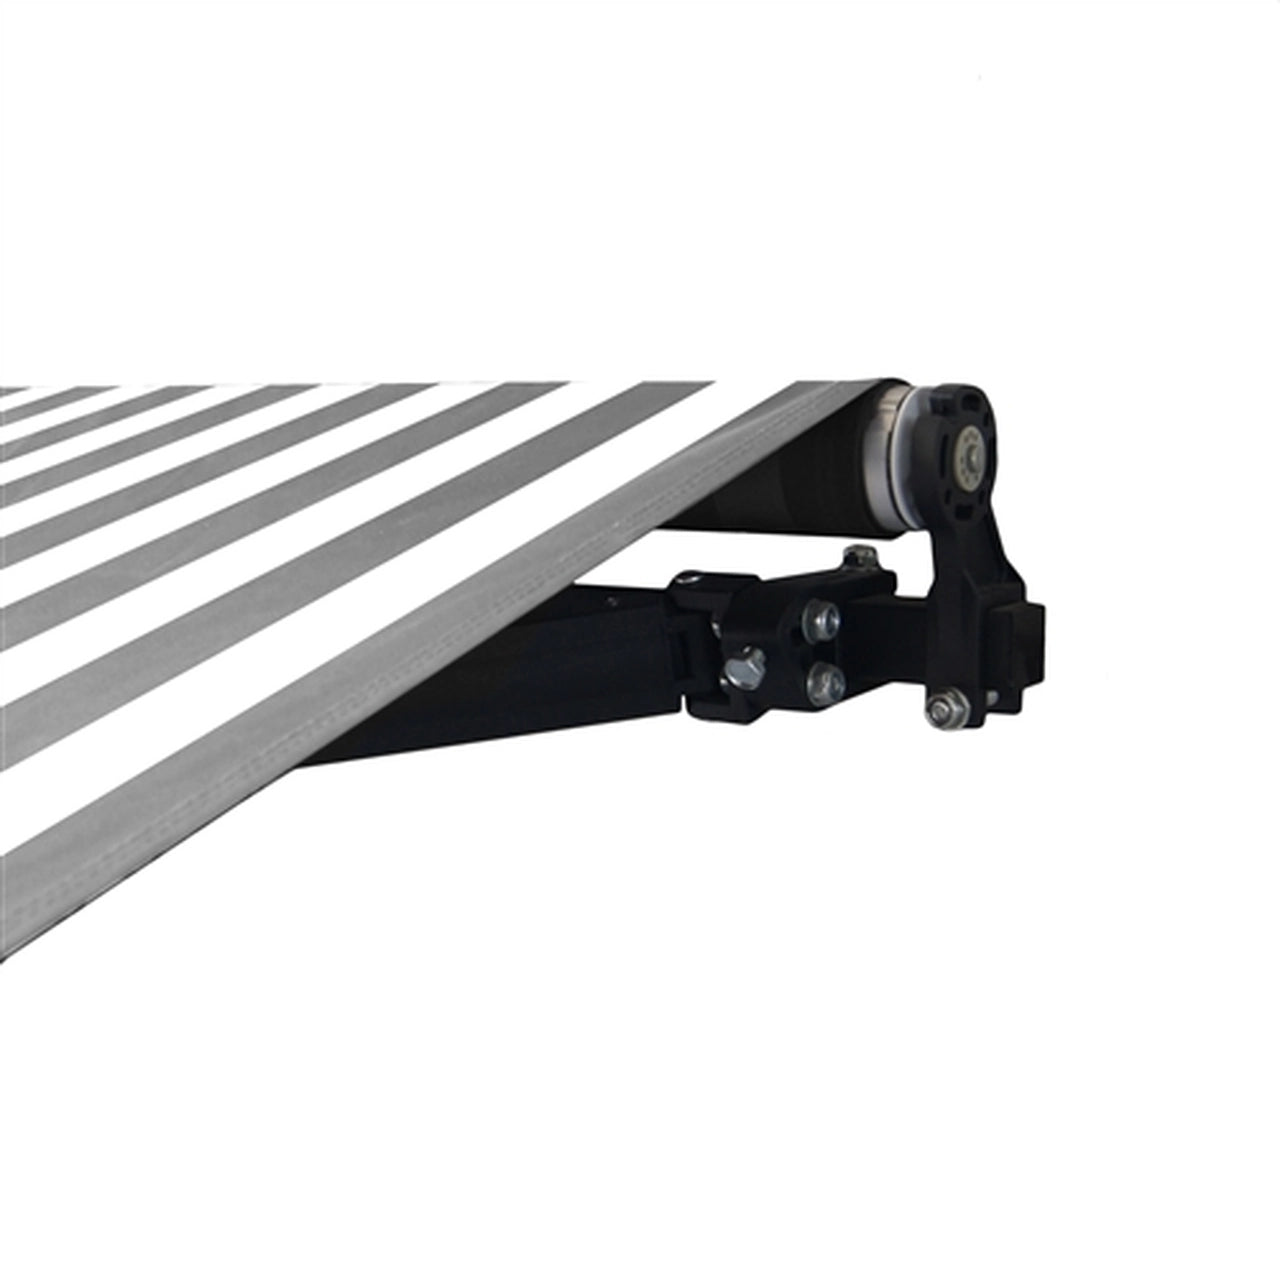 Aleko Motorized Retractable Black Frame Patio Awning 13 x 10